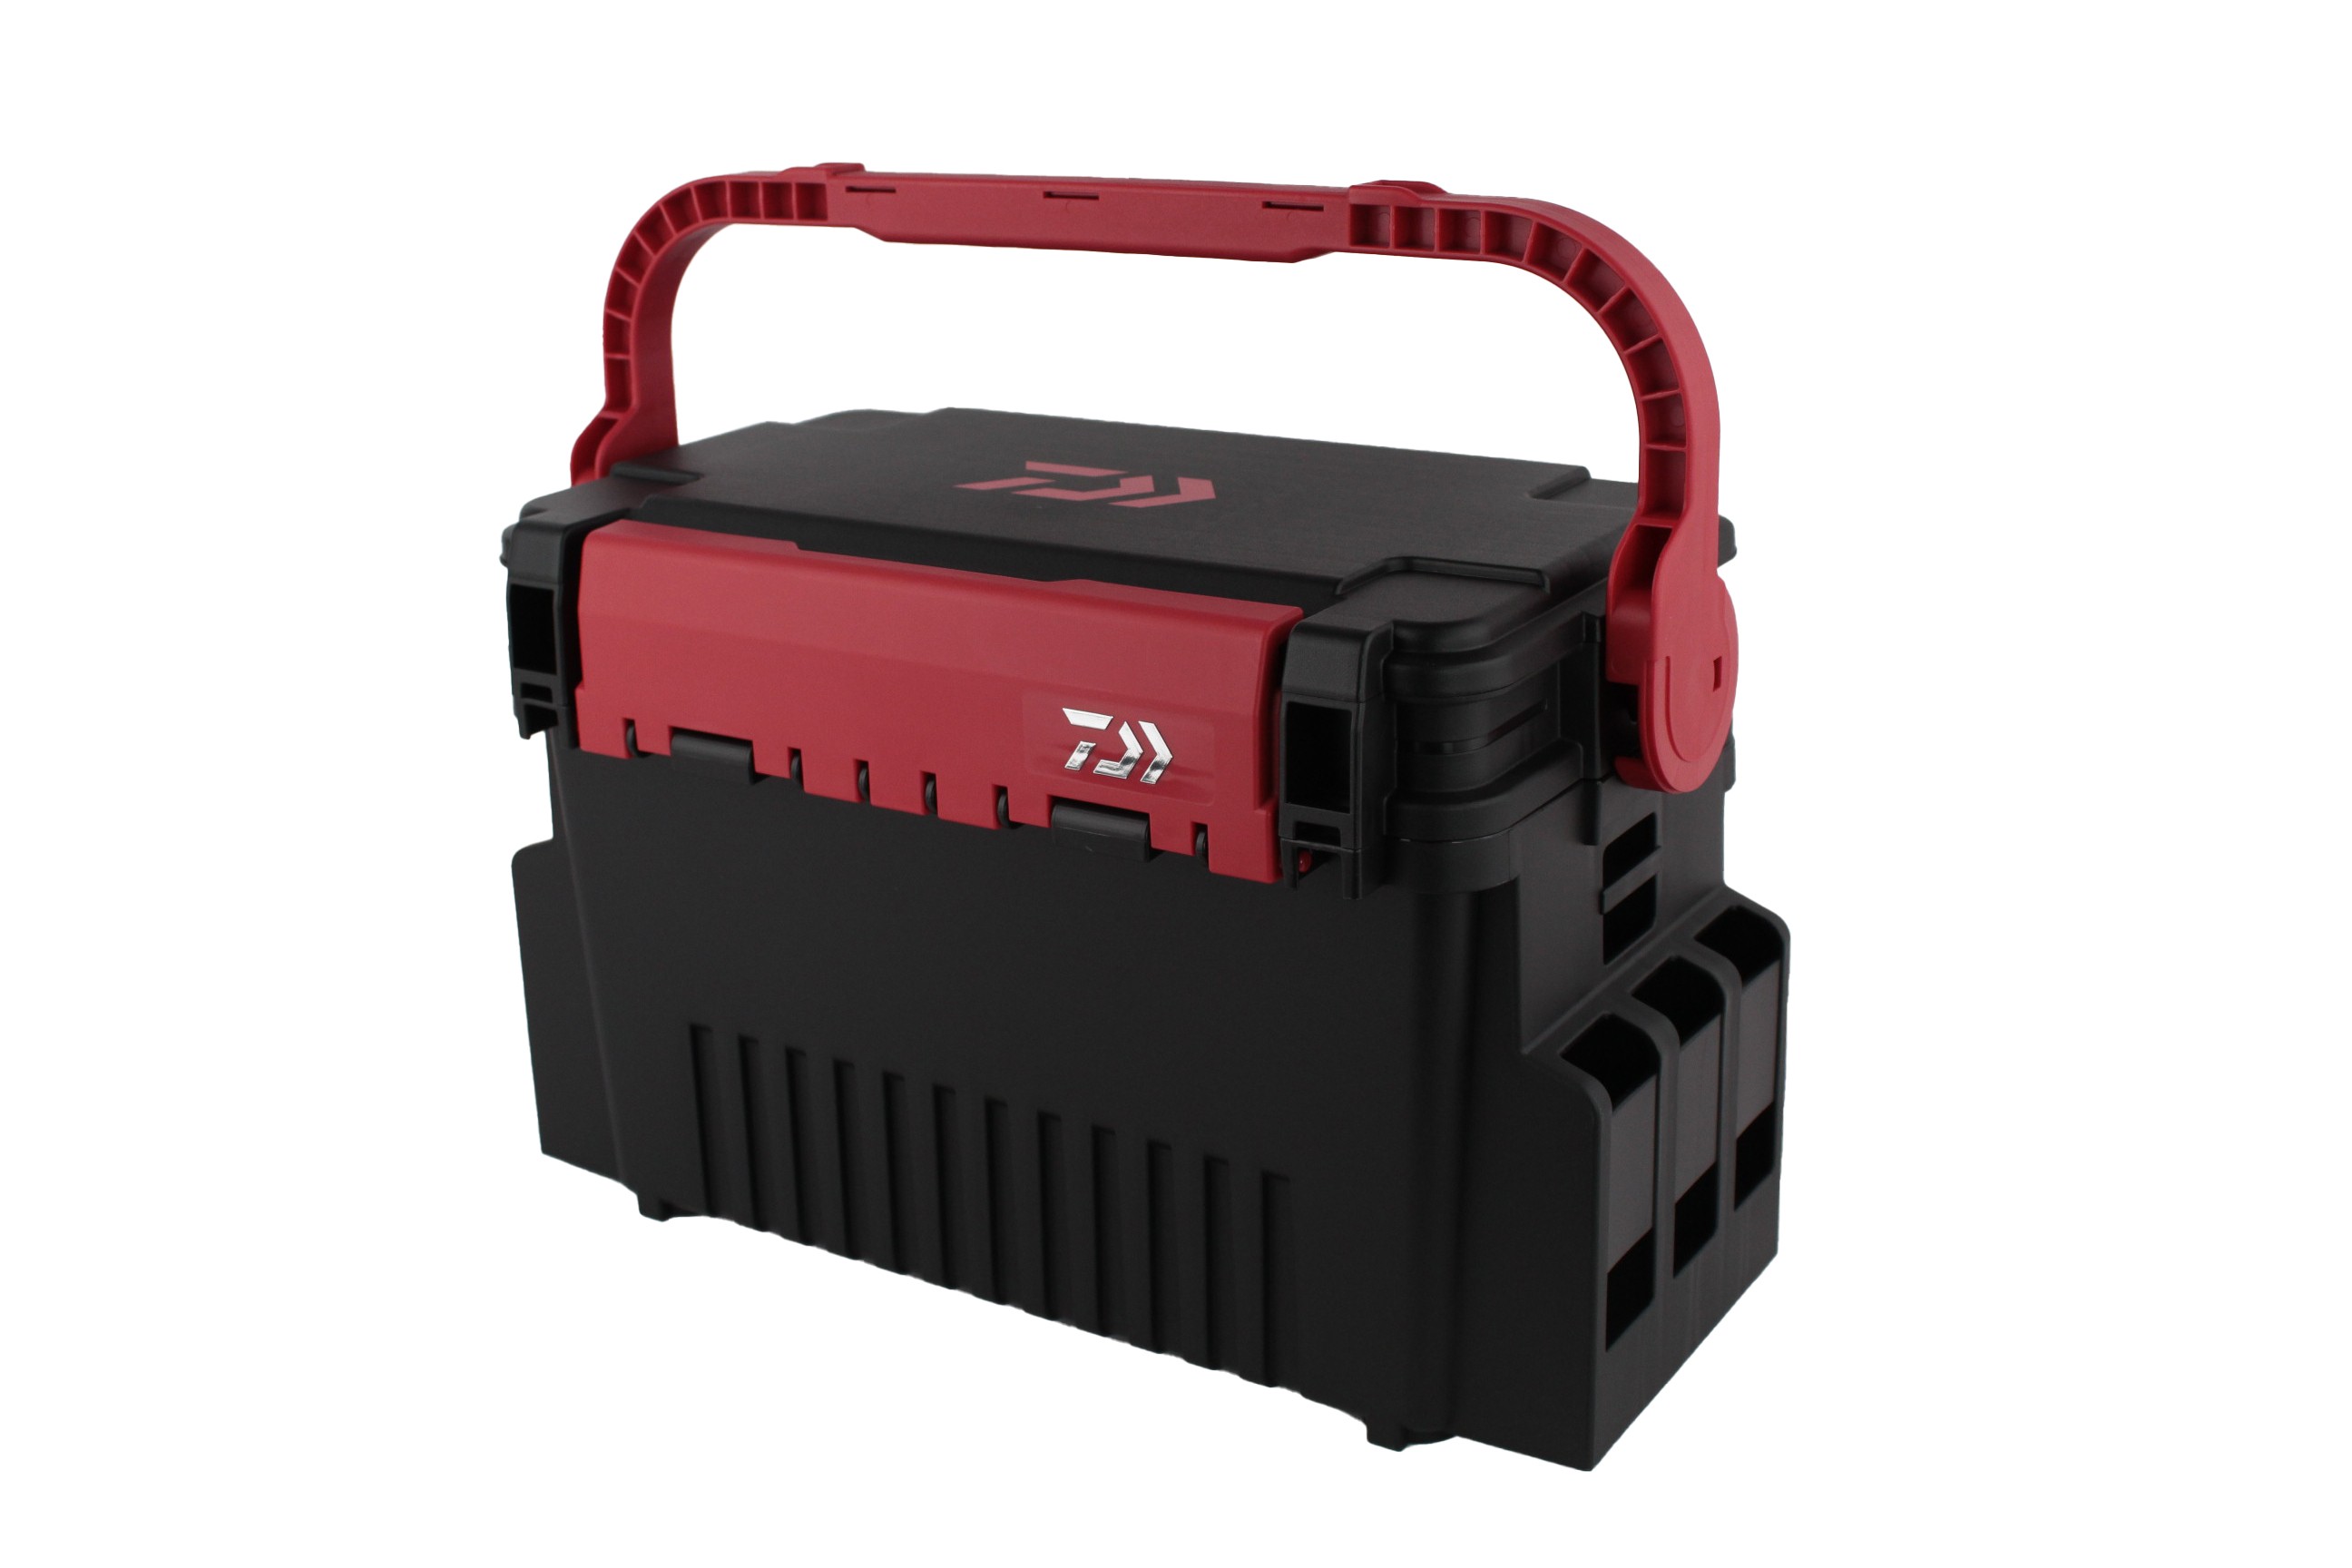 Ящик Daiwa Tackle box TB4000 black/red - фото 1